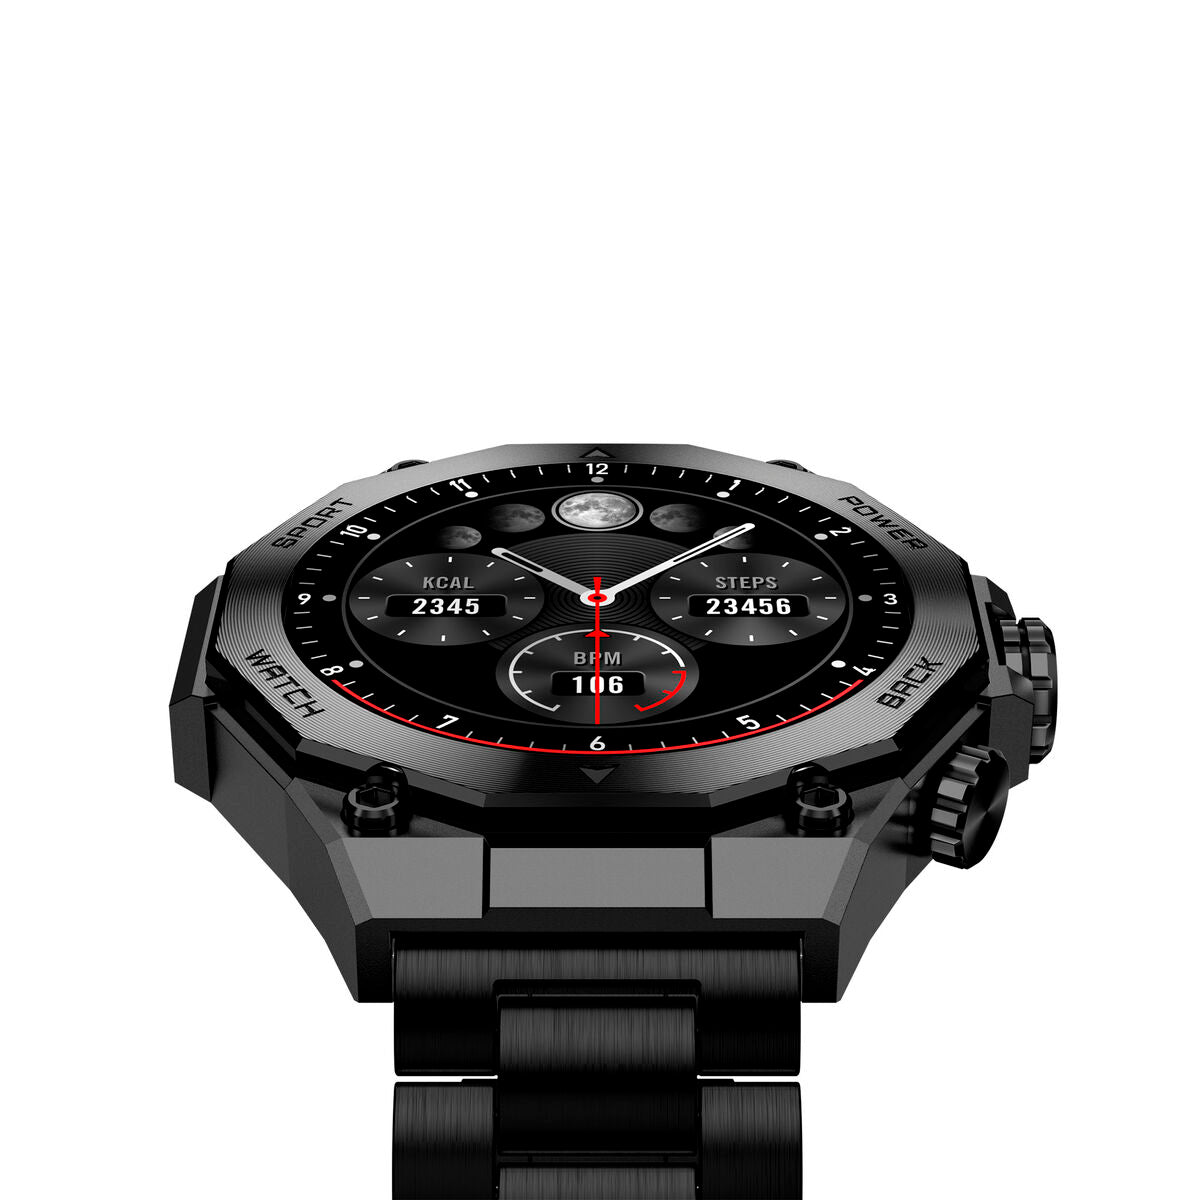 Kaufe Smartwatch KSIX Titanium Schwarz bei AWK Flagship um € 102.00